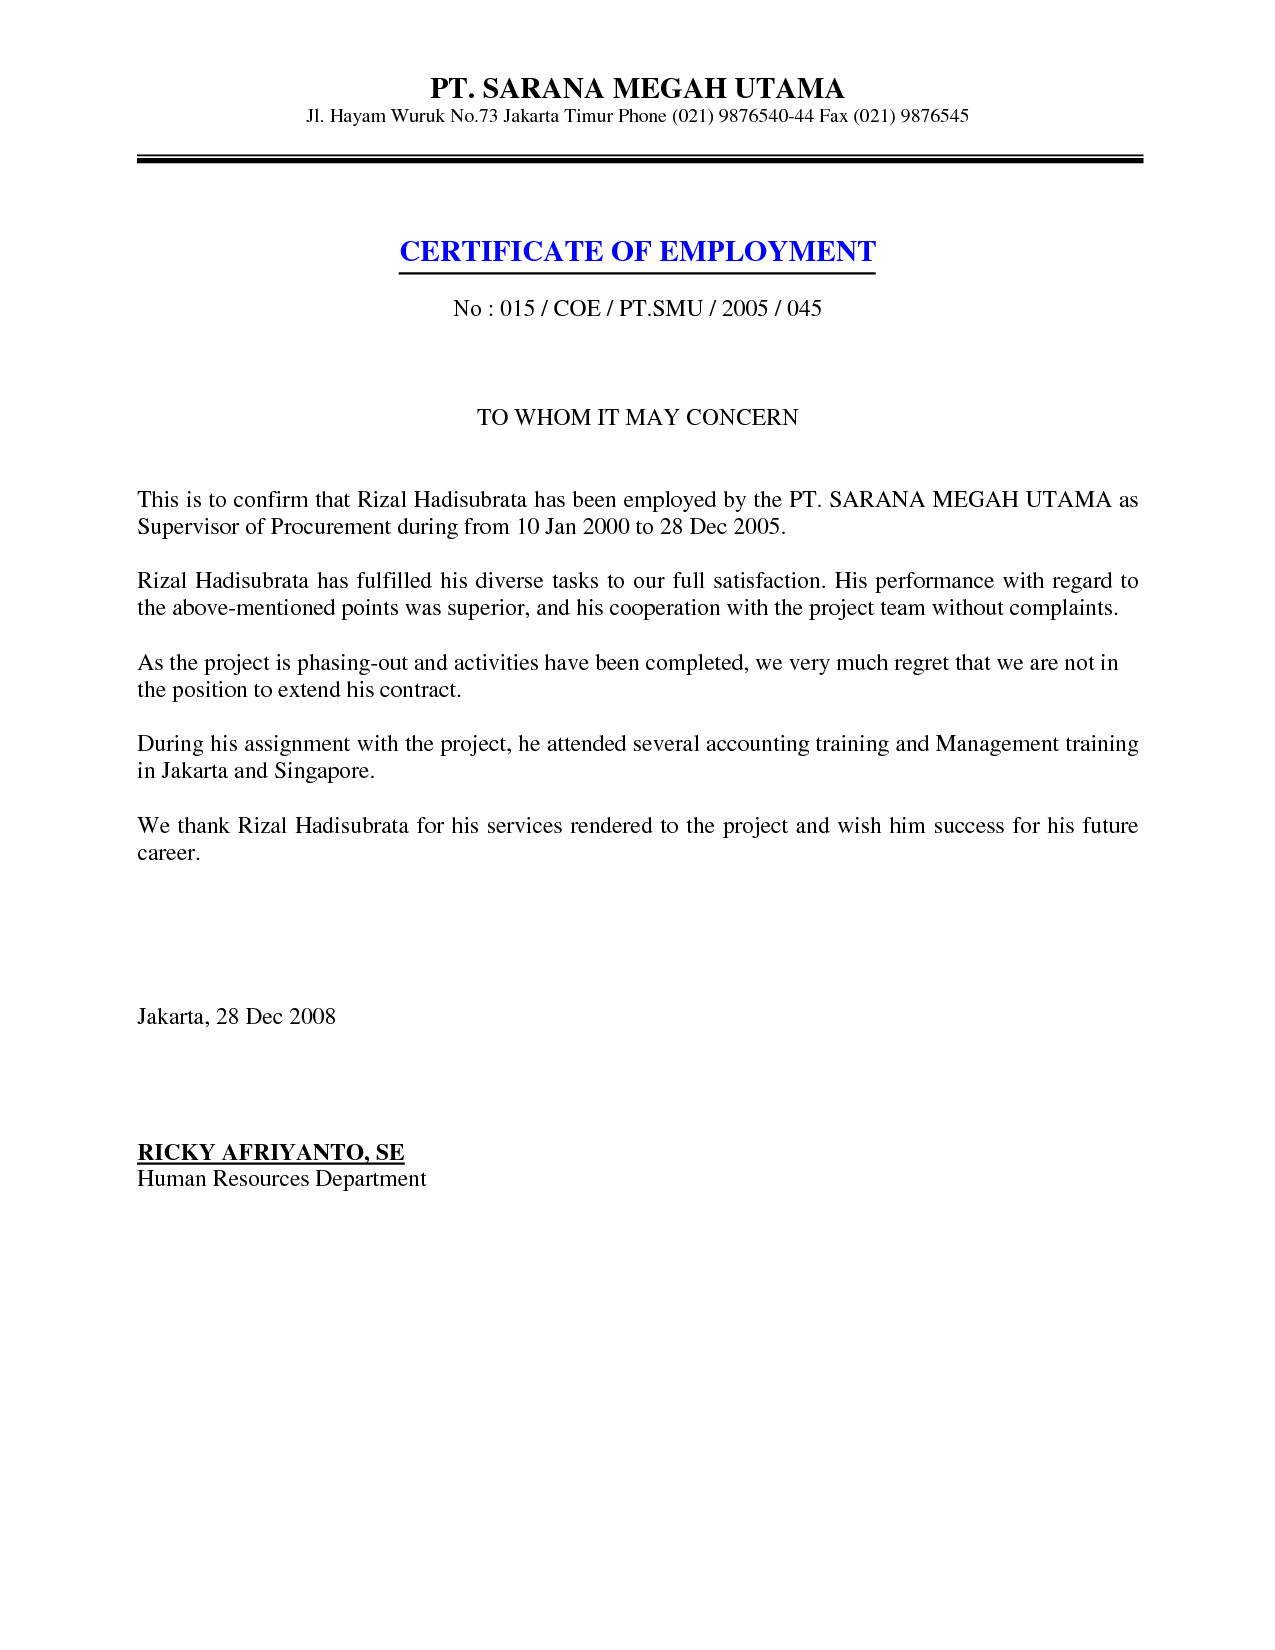 job employment certificate sample certification letter